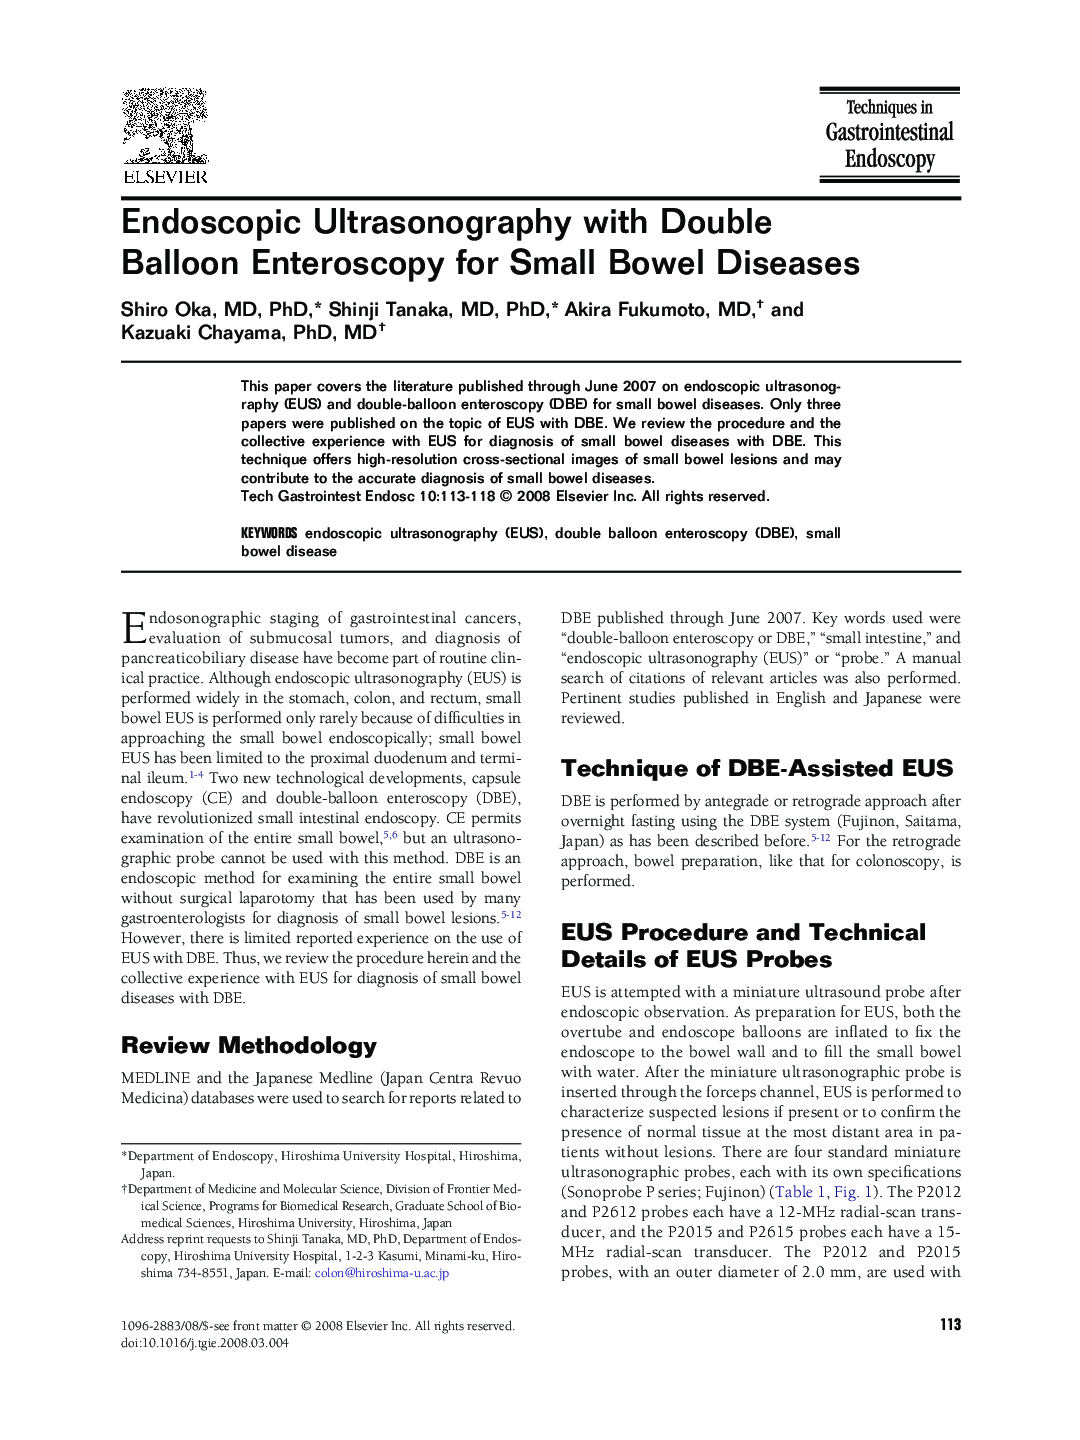 Endoscopic Ultrasonography with Double Balloon Enteroscopy for Small Bowel Diseases